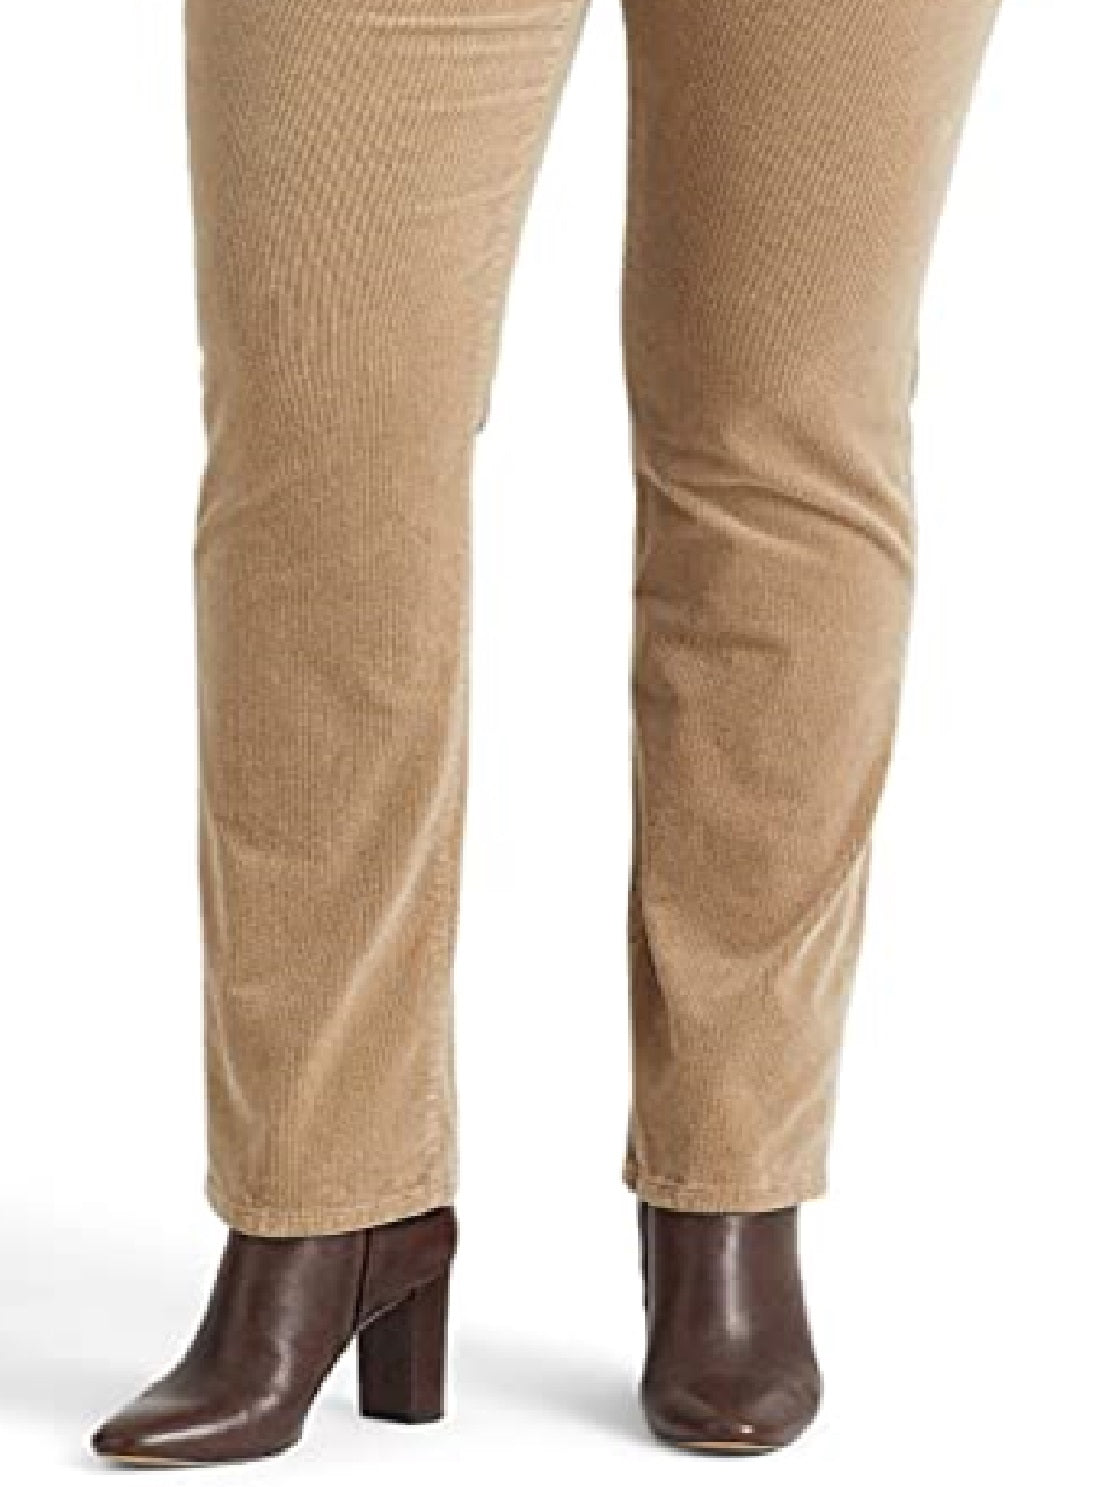 Ralph Lauren Women's Corduroy Mid Rise Straight Pant Brown Size 22W